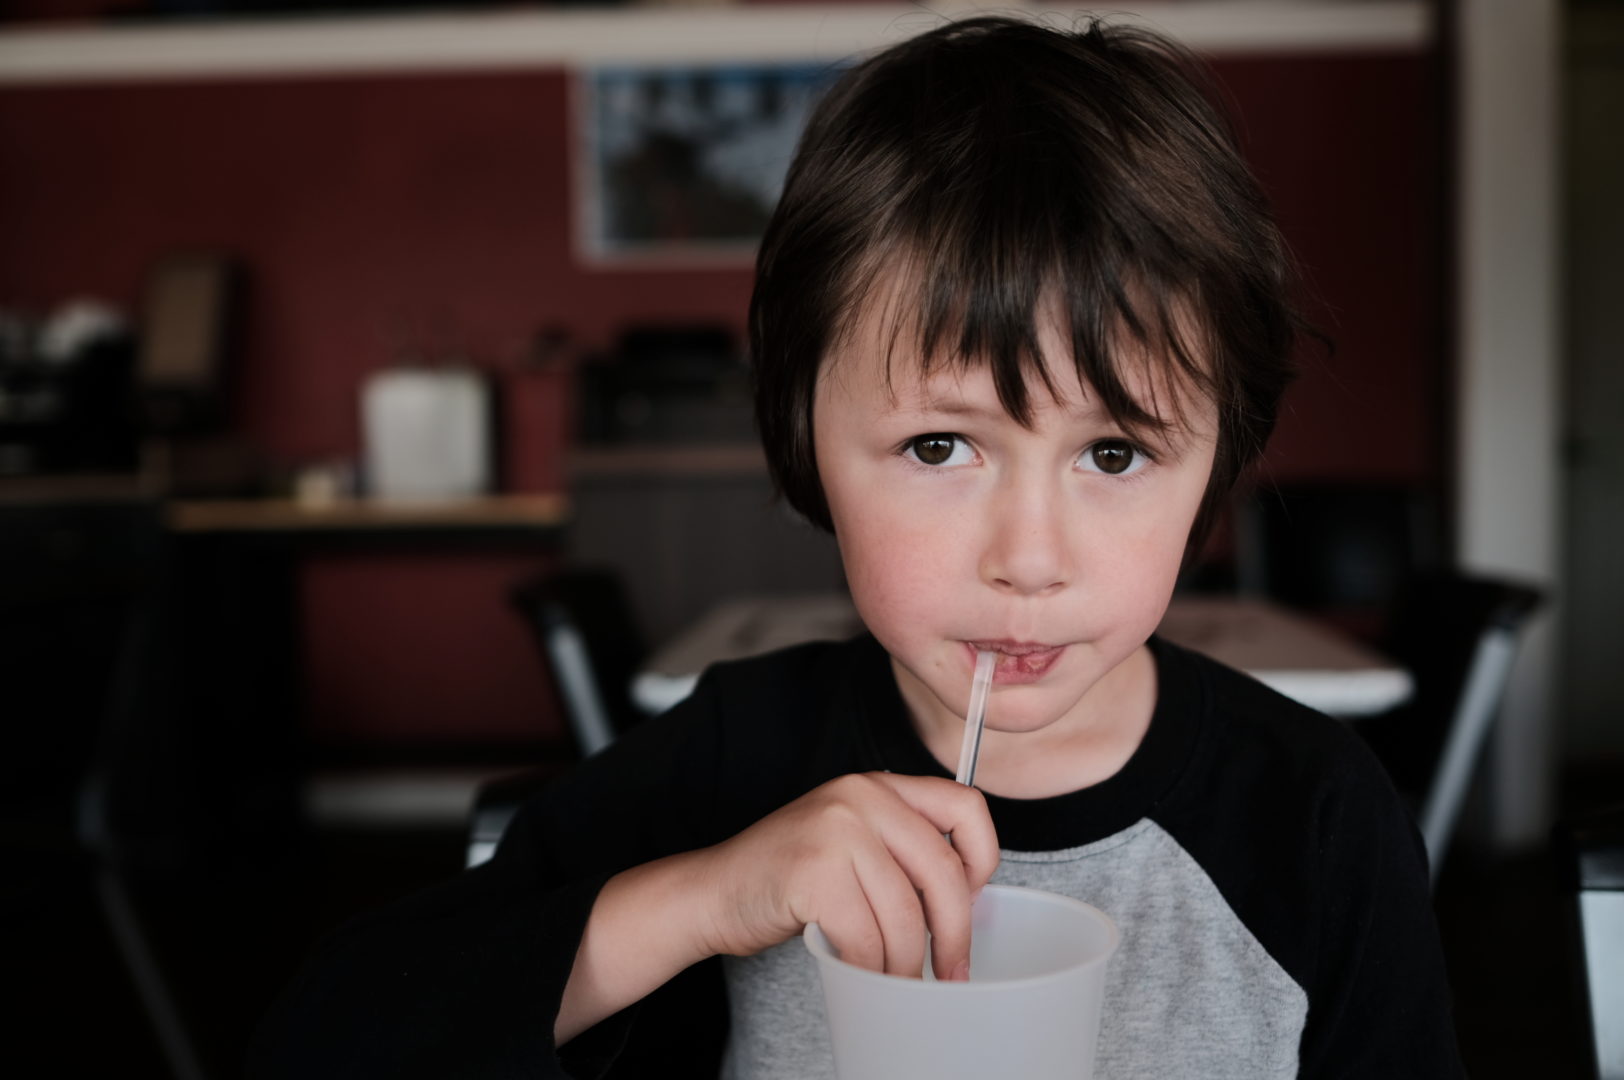 A little boy drinks through a straw.